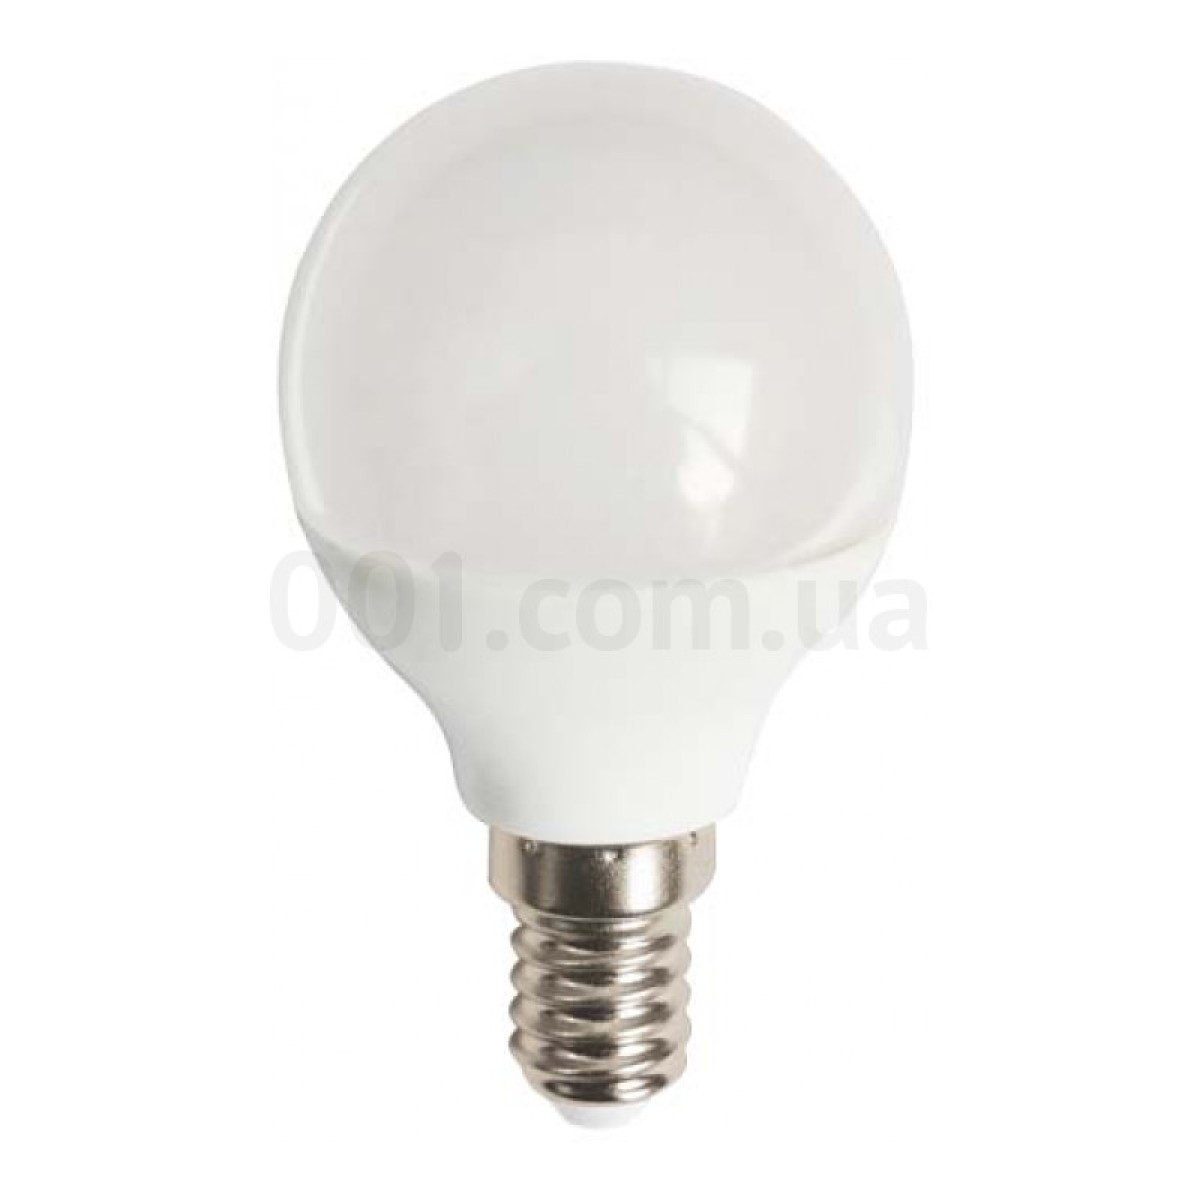 Светодиодная лампа LB-380 P45 (шар) 4Вт 4000K E14, Feron 98_98.jpg